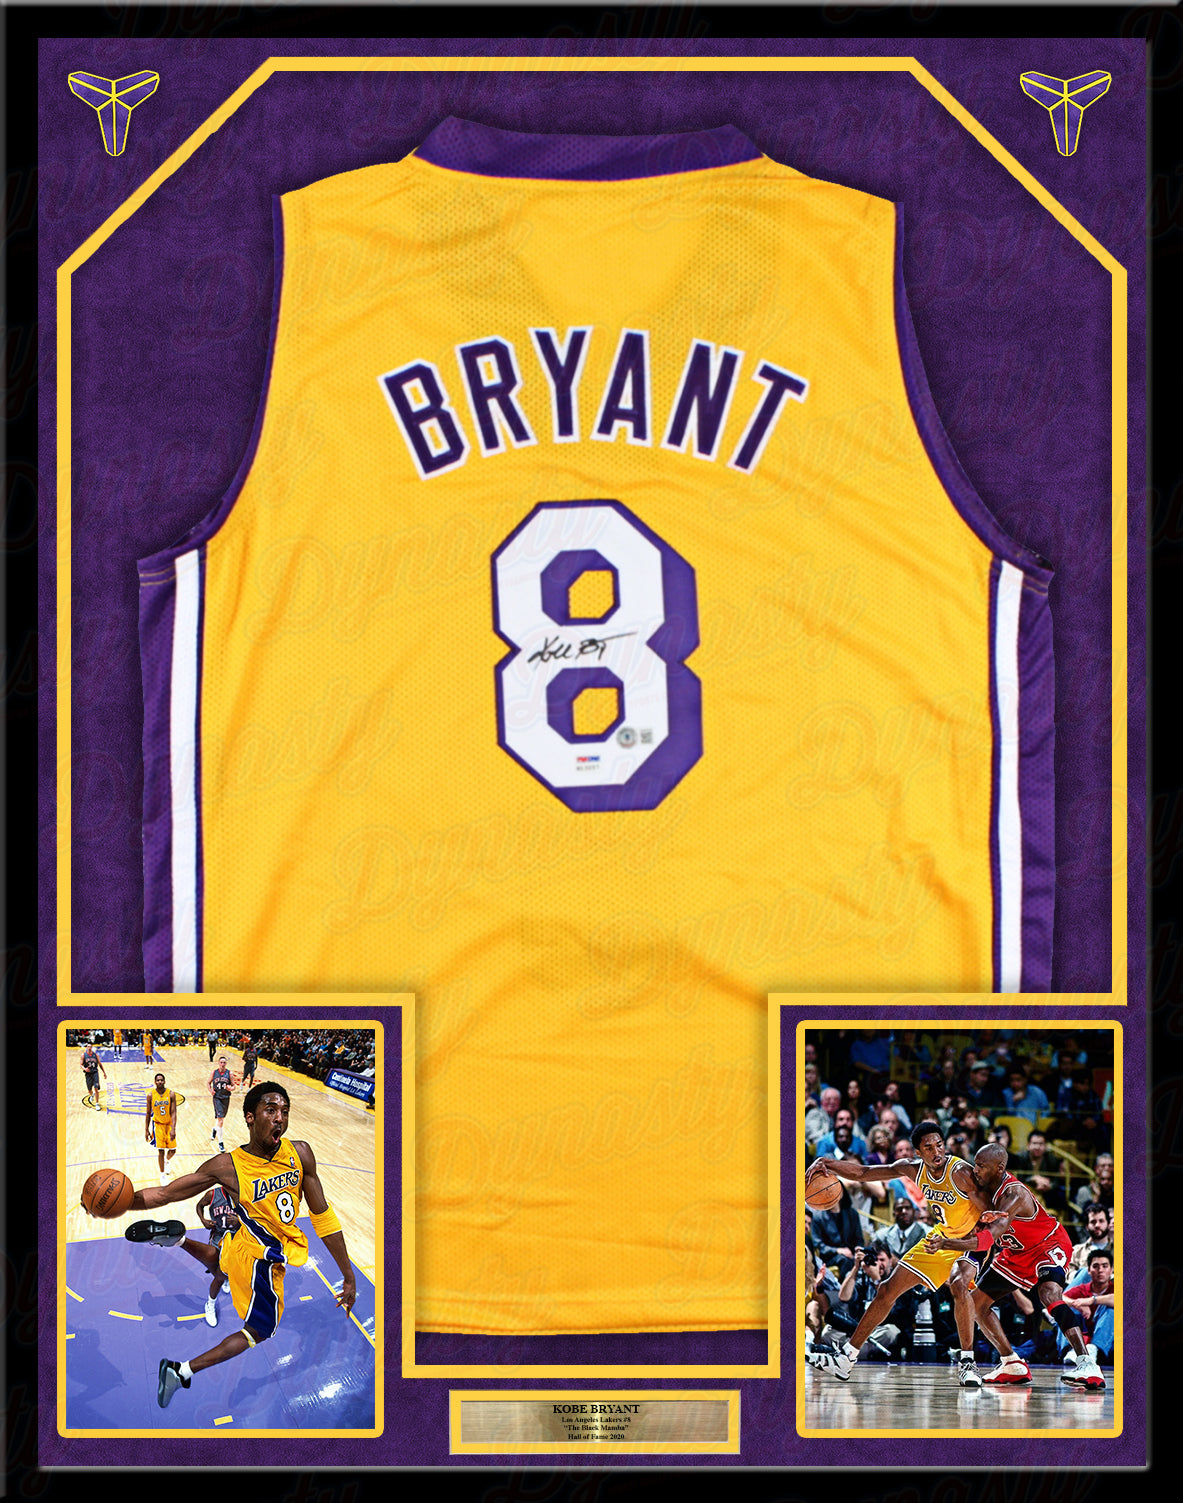 Kobe Bryant Jerseys, Gear, Kobe Shirts, Kobe Bryant Memorabilia